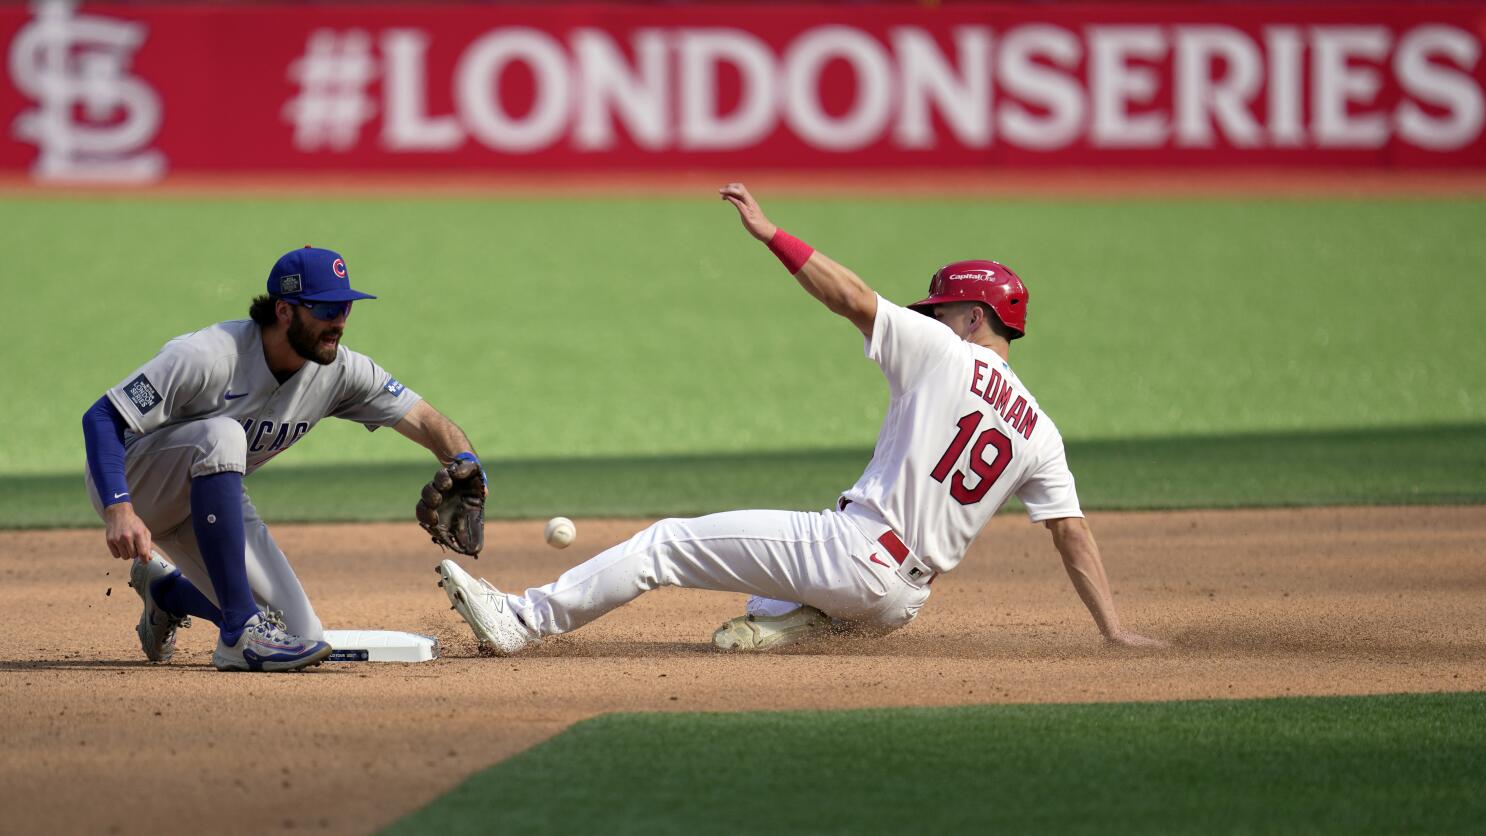 London Series: Chicago Cubs dominate St. Louis Cardinals